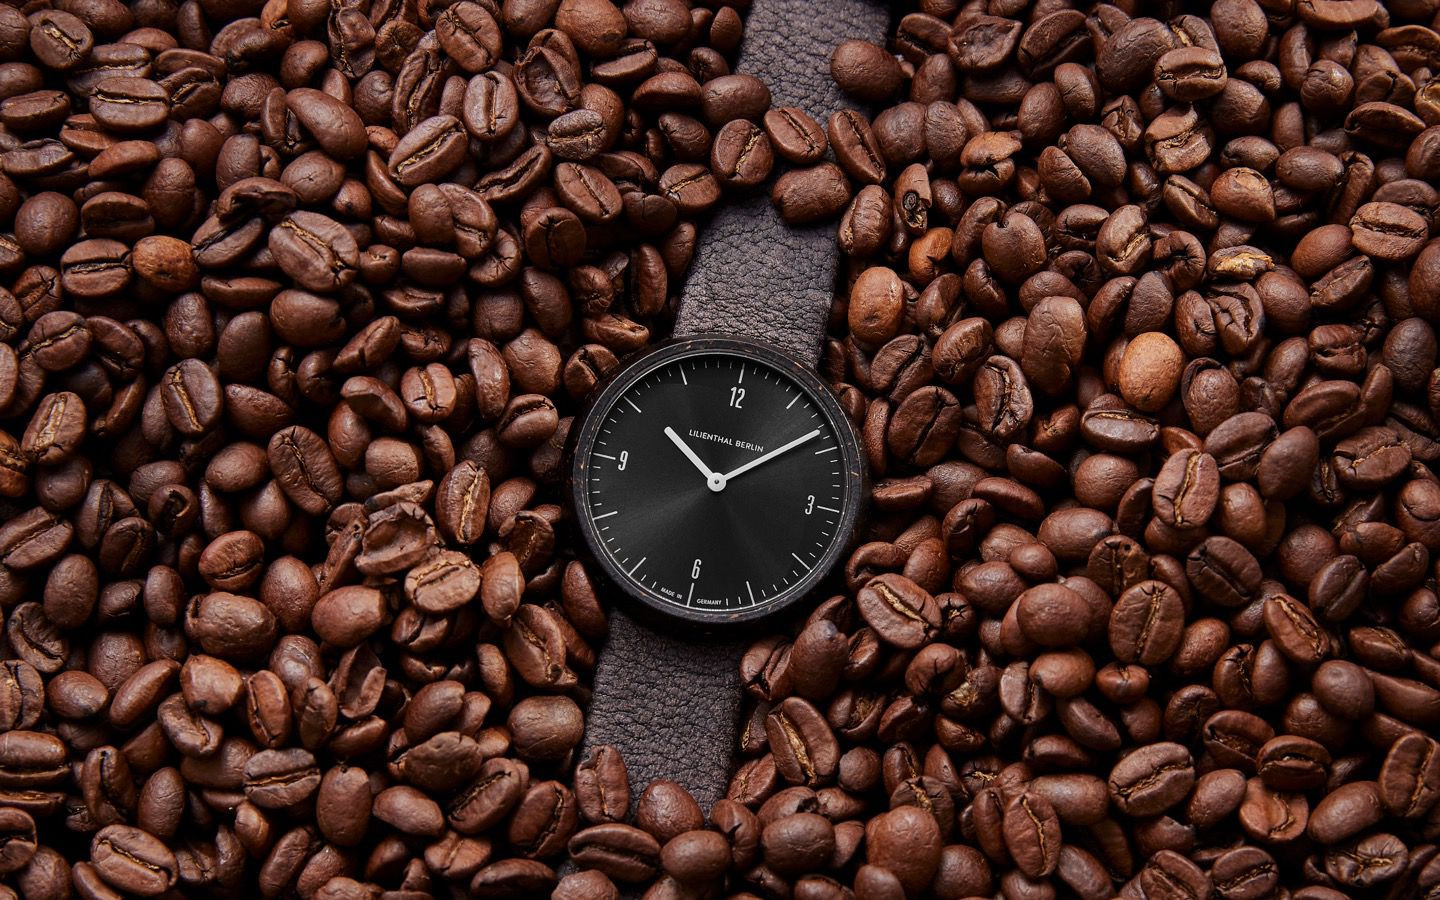 The Coffee Watch